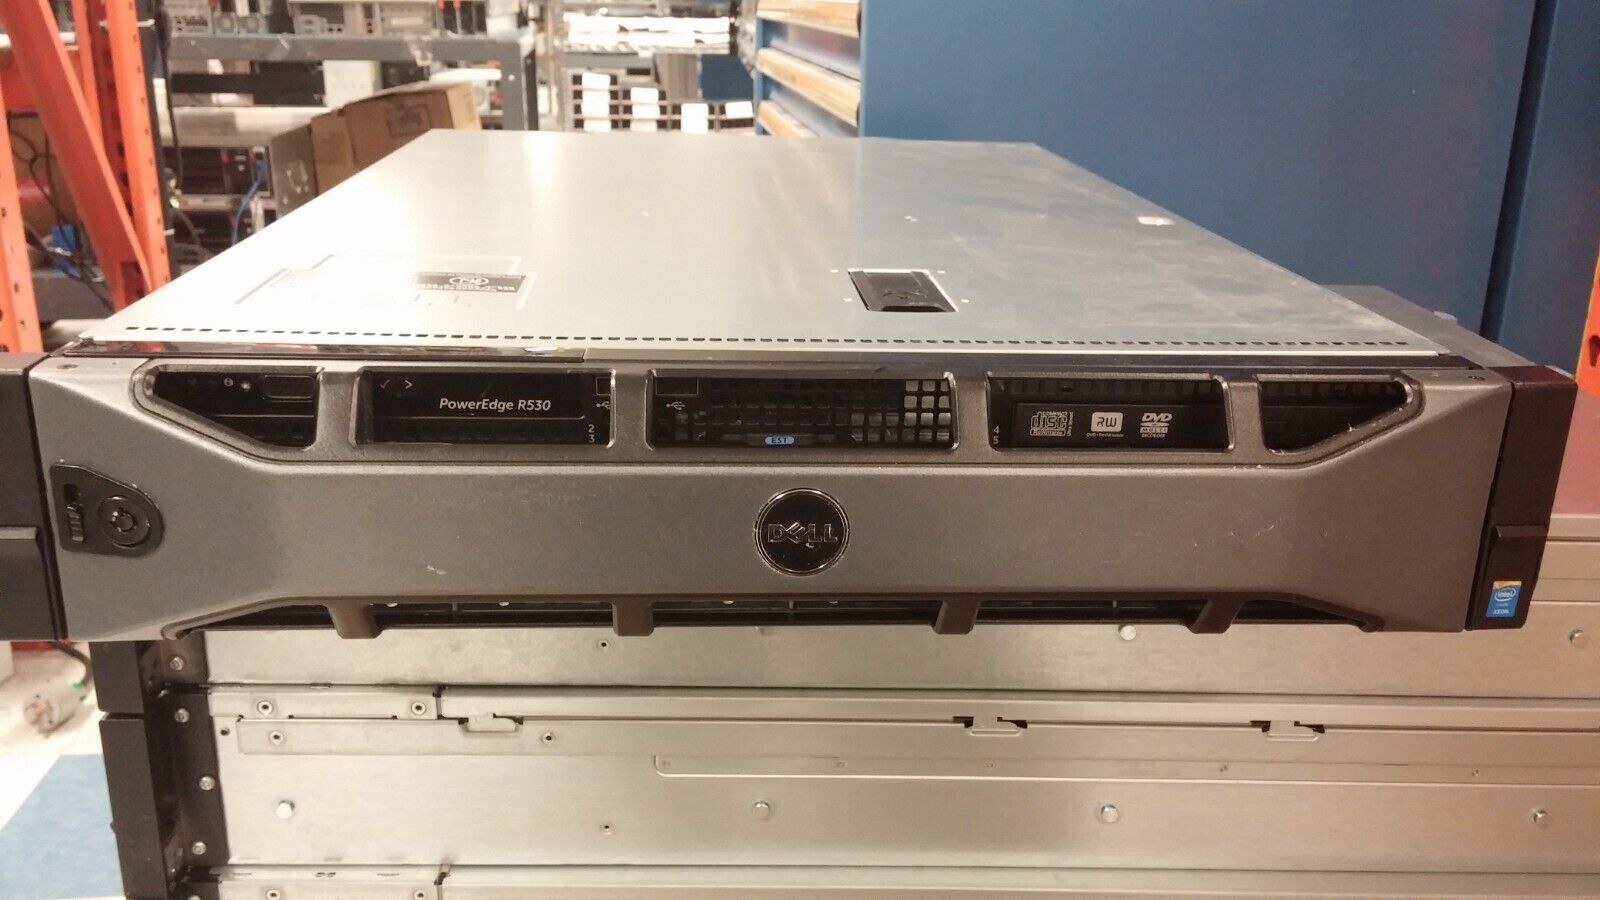 Dell PowerEdge R530 8 BAY, 2 Heatsinks, System Board, H730,Idrac Ent, 2x750w Psu